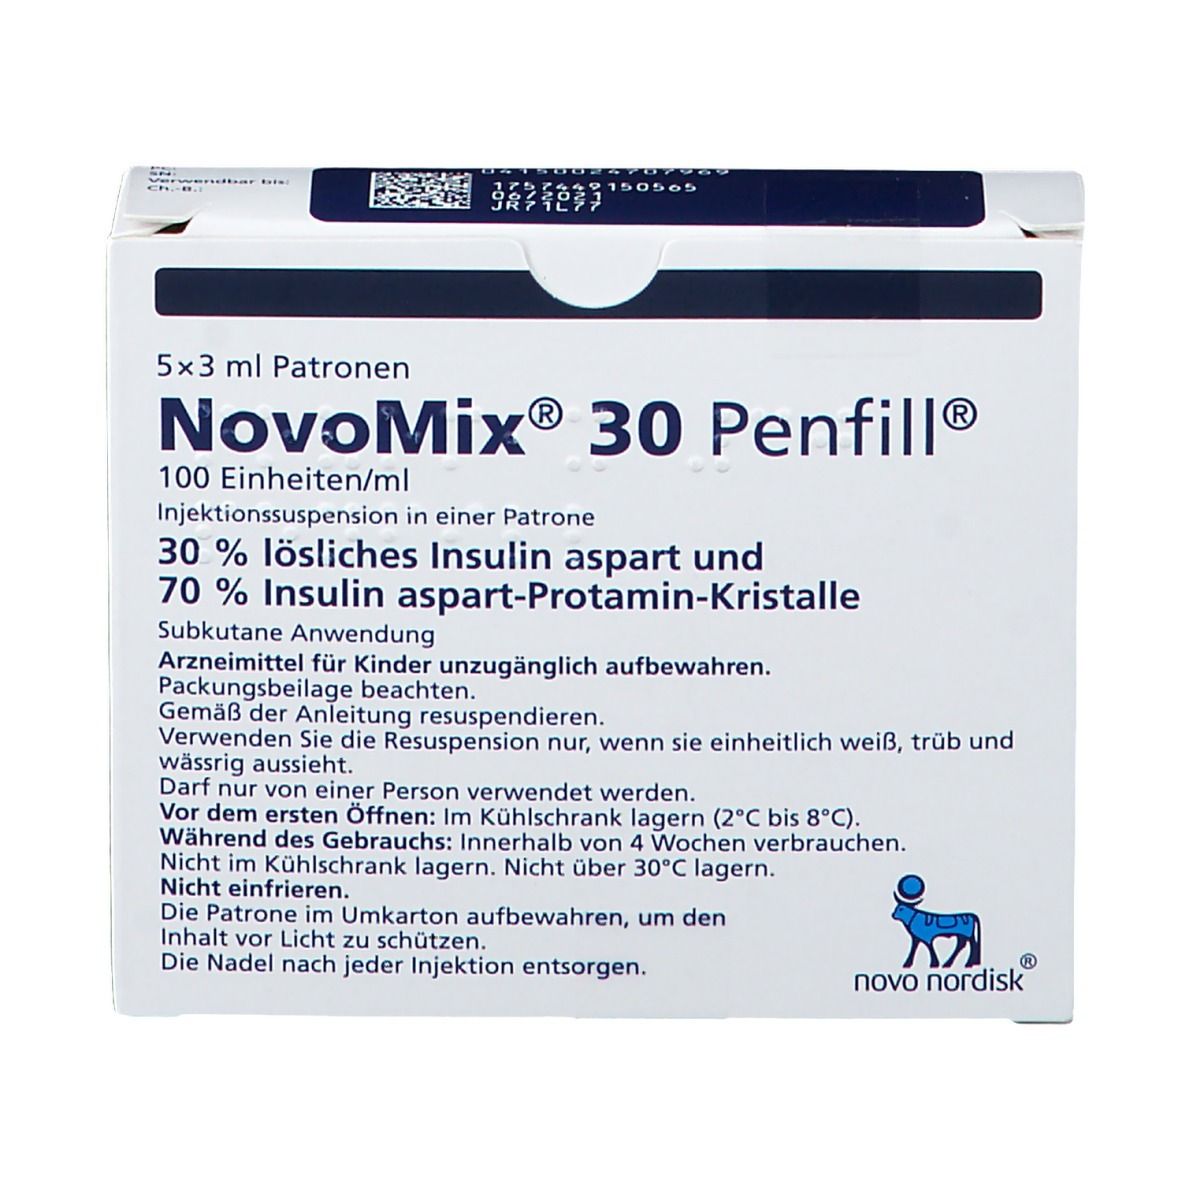 Novomix® 30 Penfill® 100 Einheiten/ml